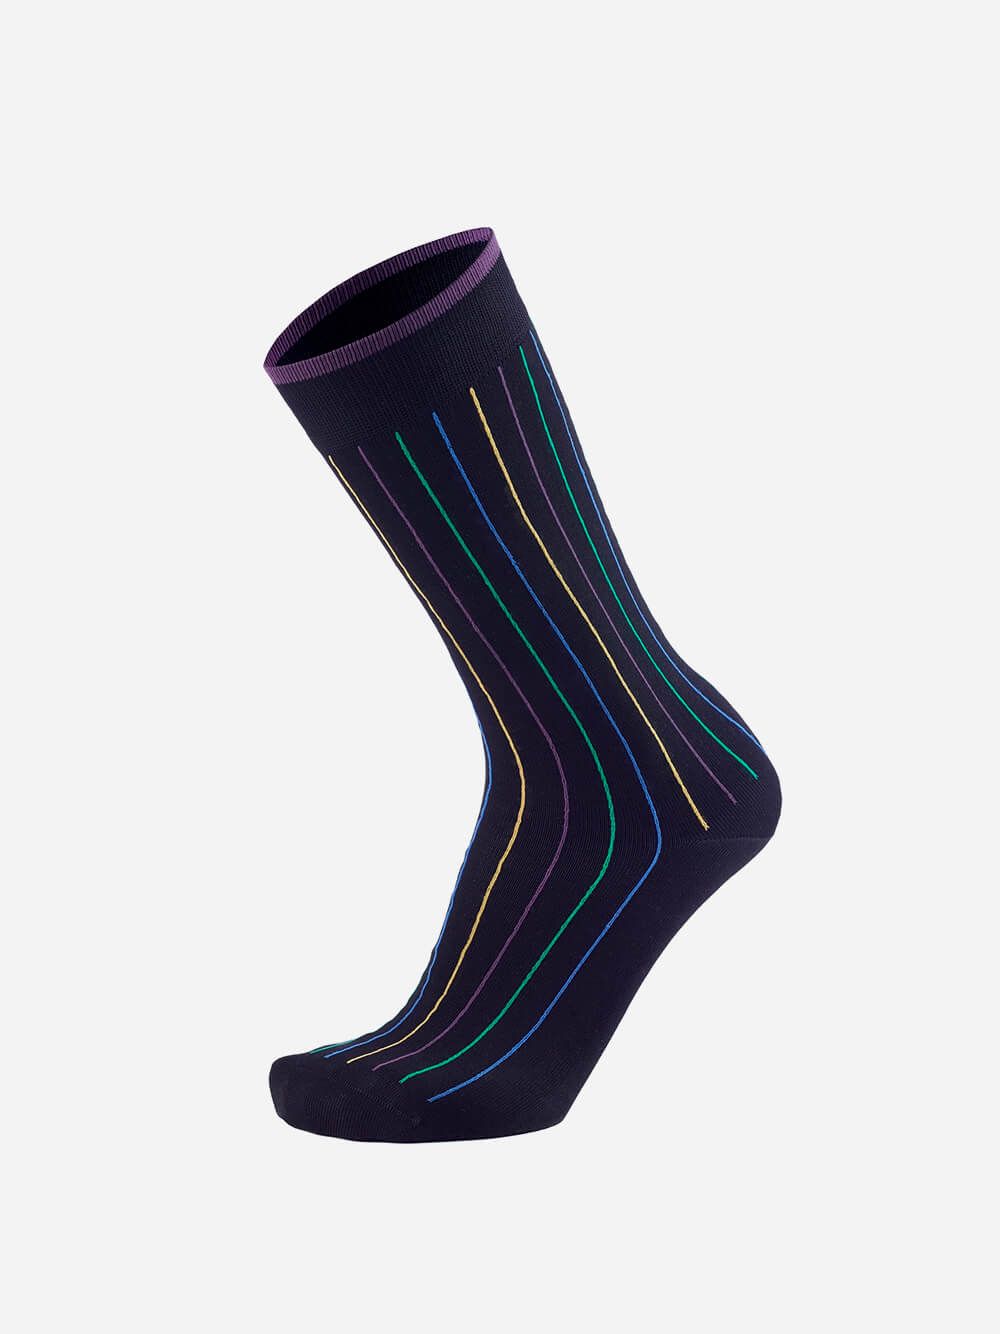 Colourful Stripes Black Socks | Westmister